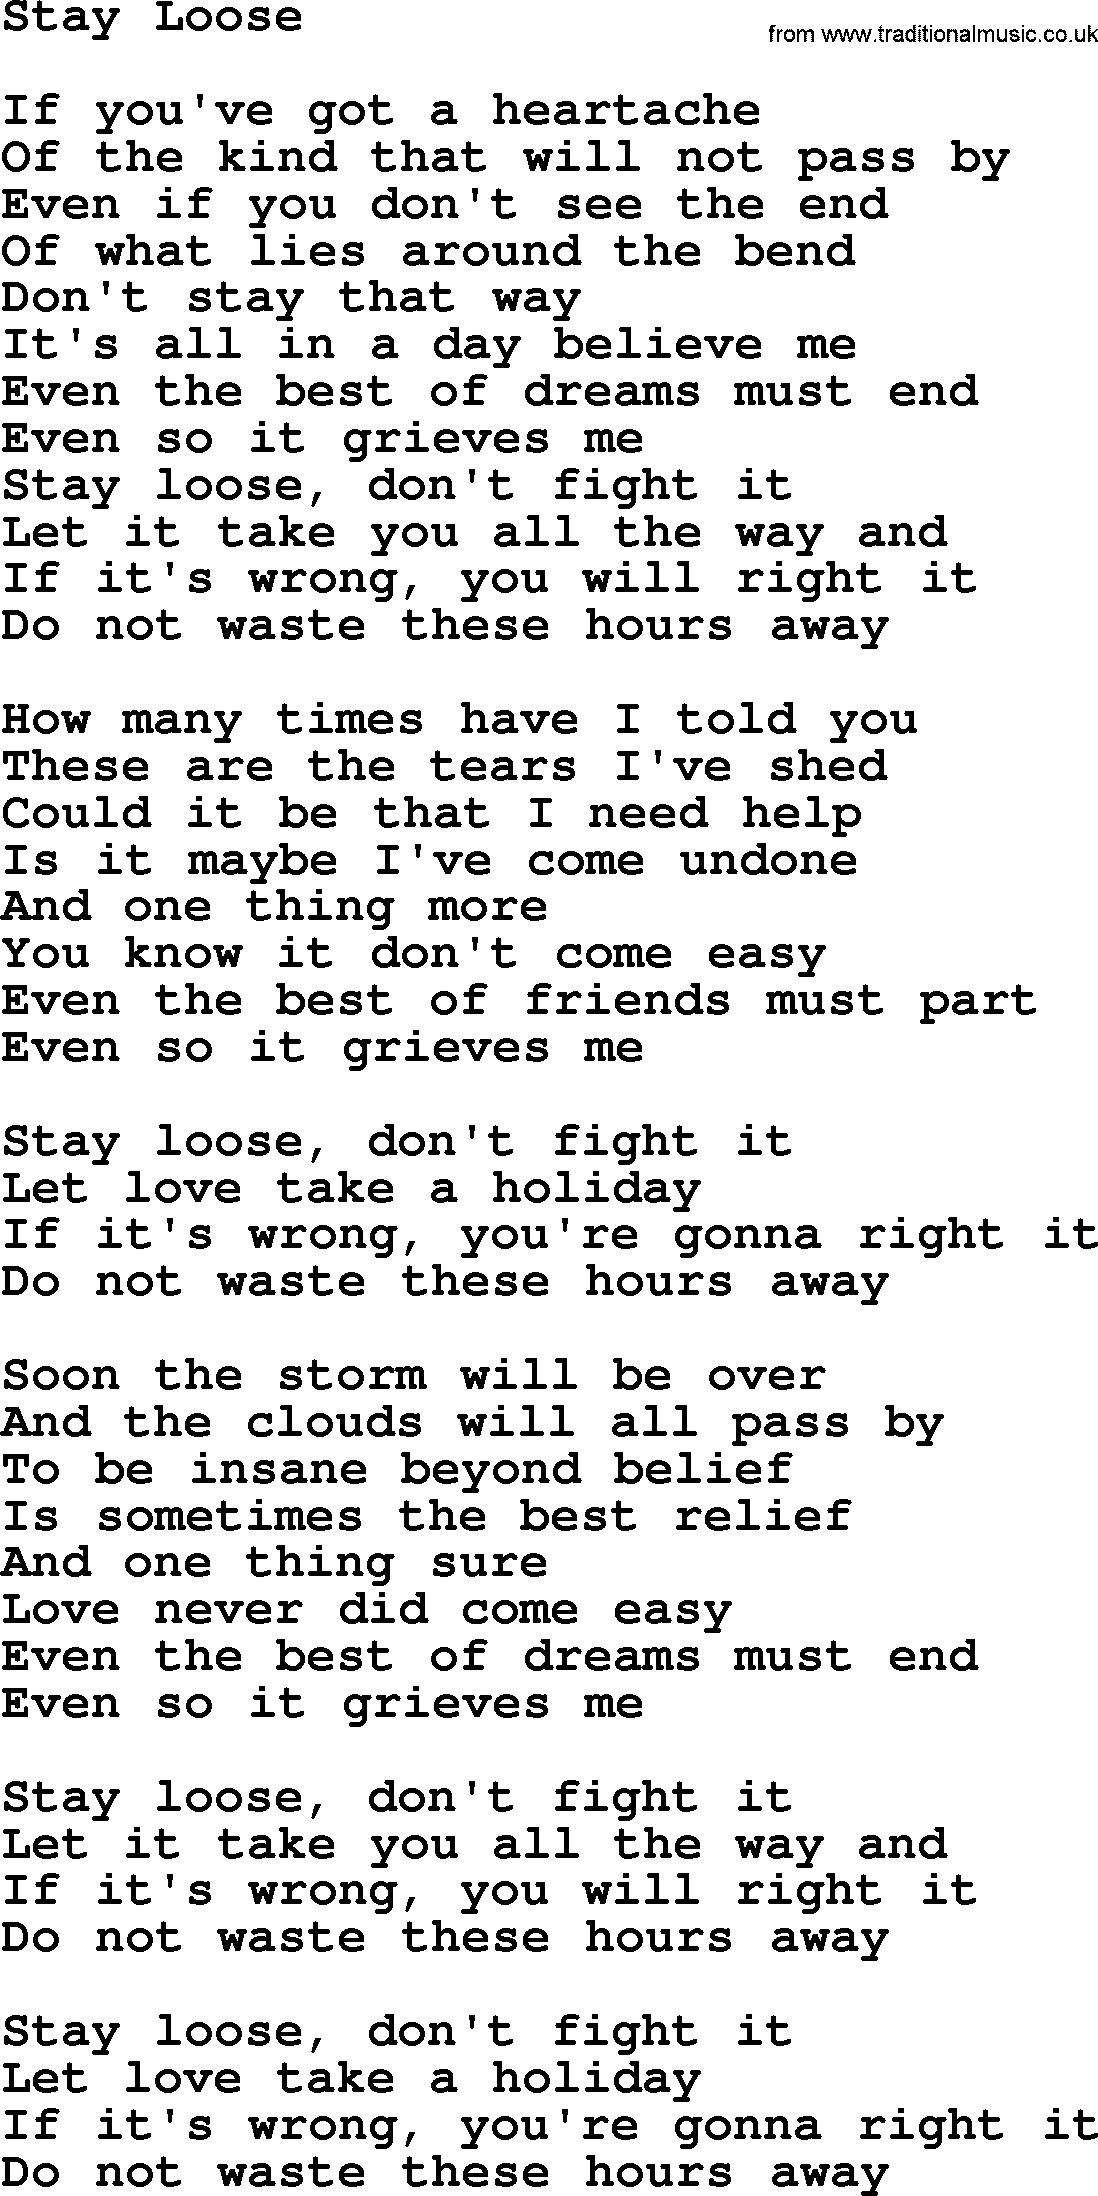 Gordon Lightfoot song Stay Loose, lyrics